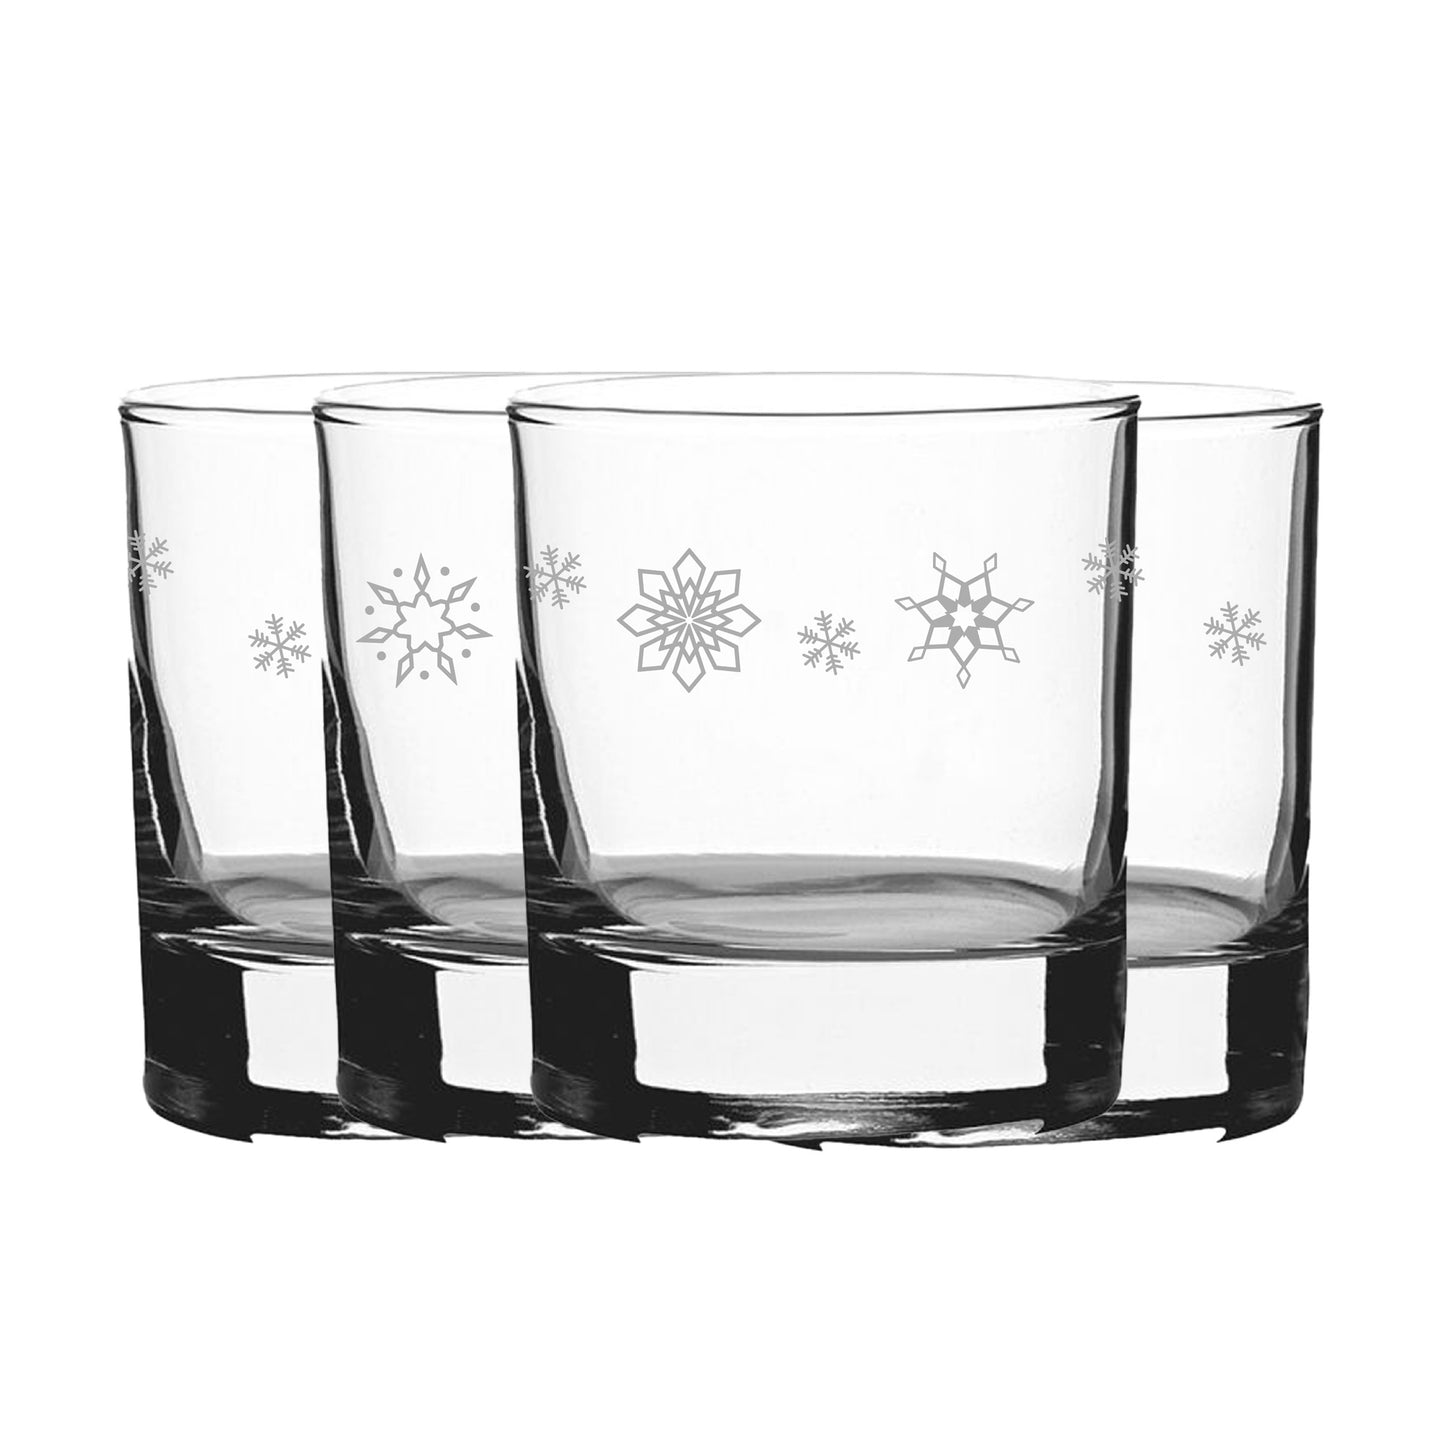 Engraved Snowflake Pattern Whiskey Glass Set of 4 11.5oz Glasses Image 2